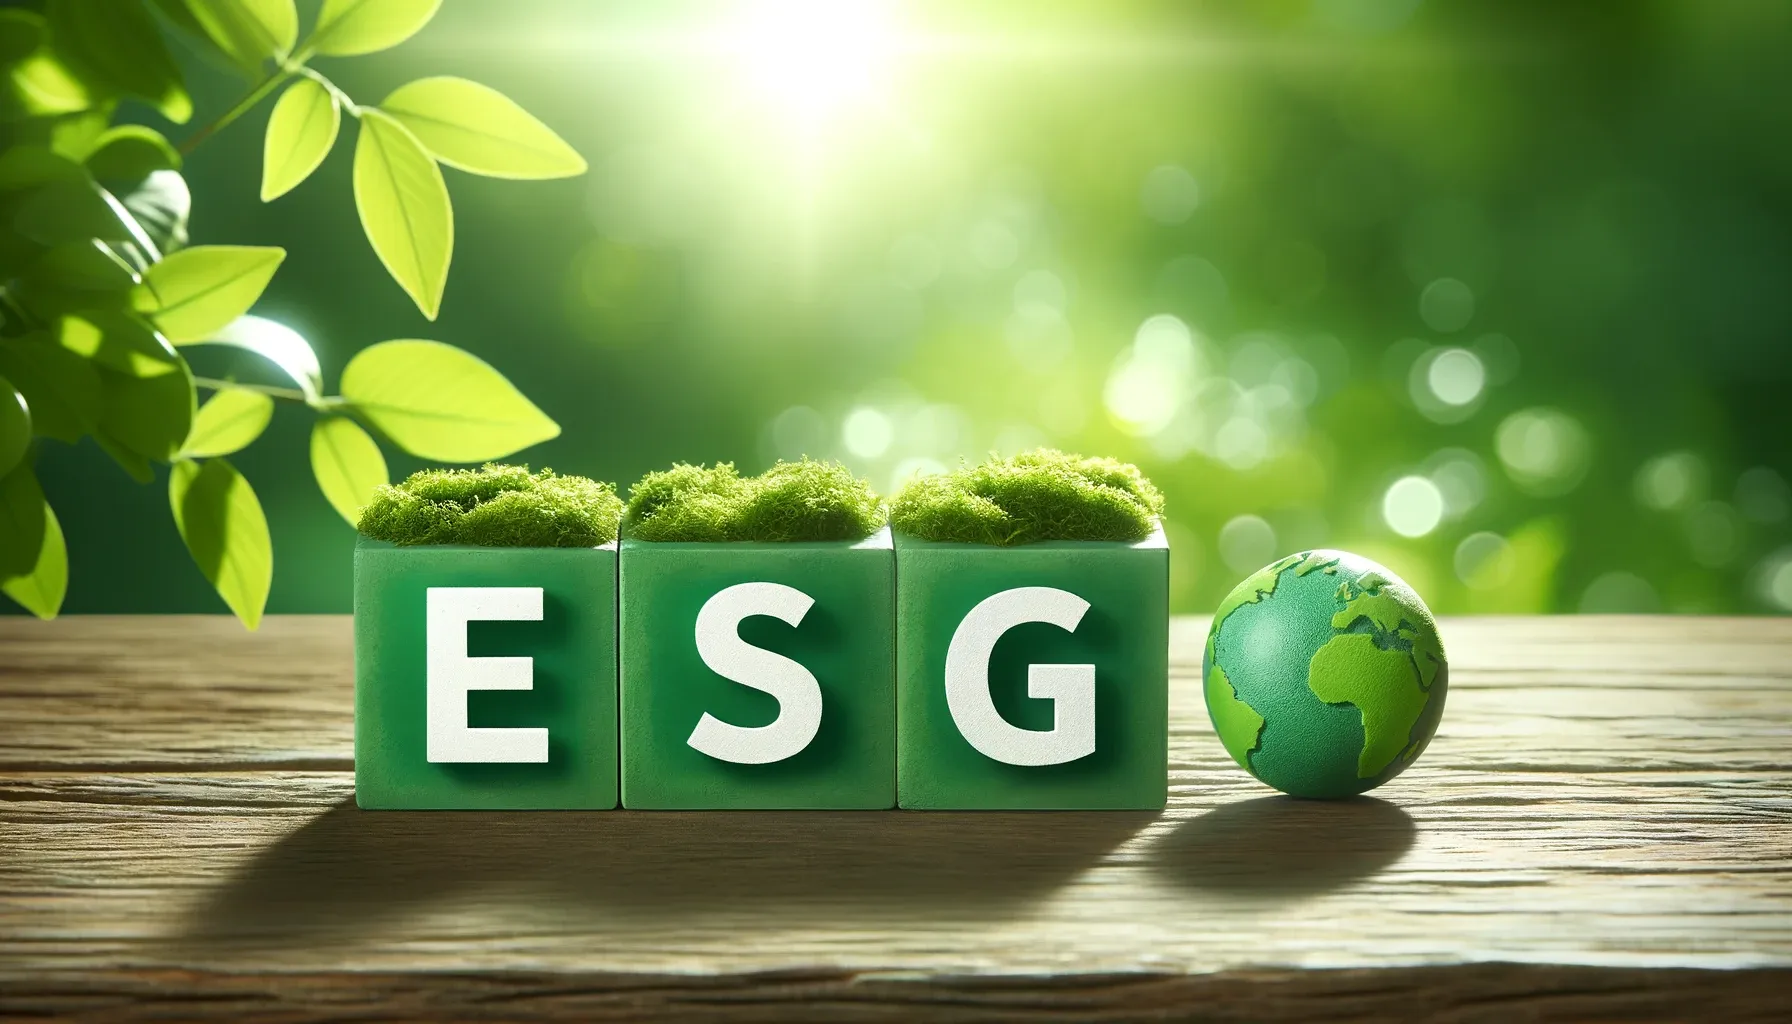 ESG Environmental Social Governance